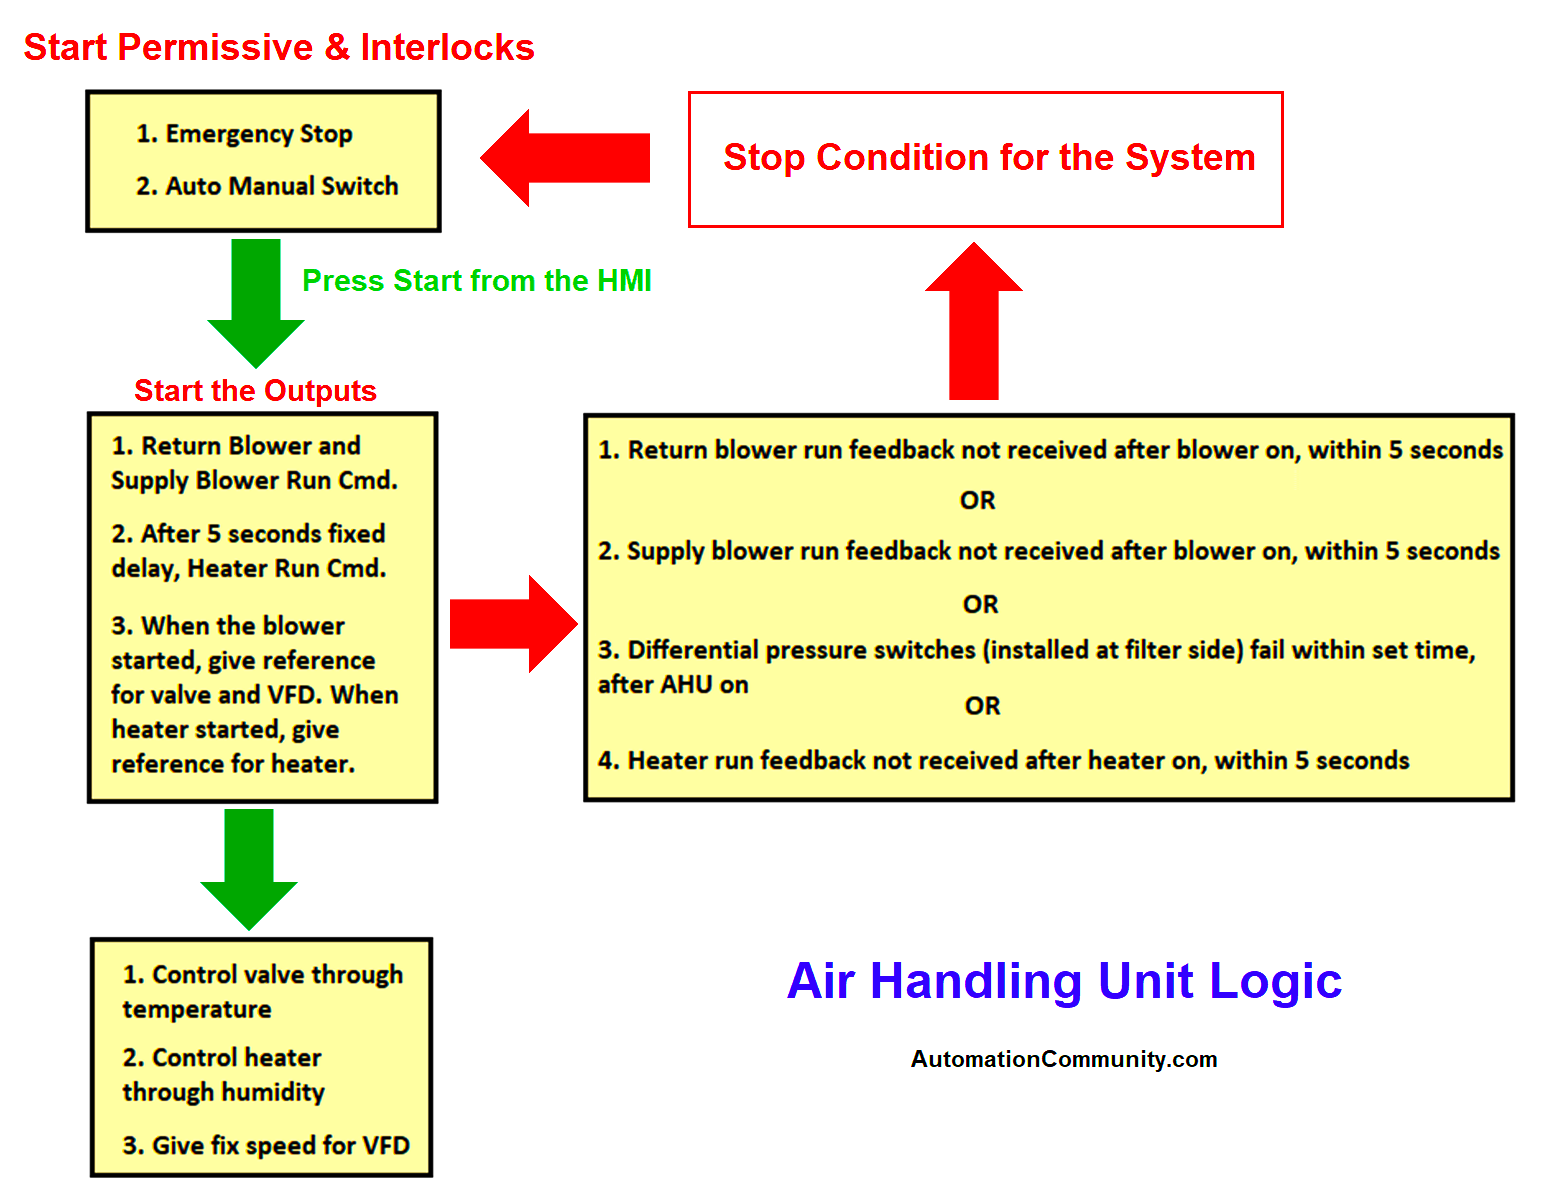 Air Handling Unit Logic